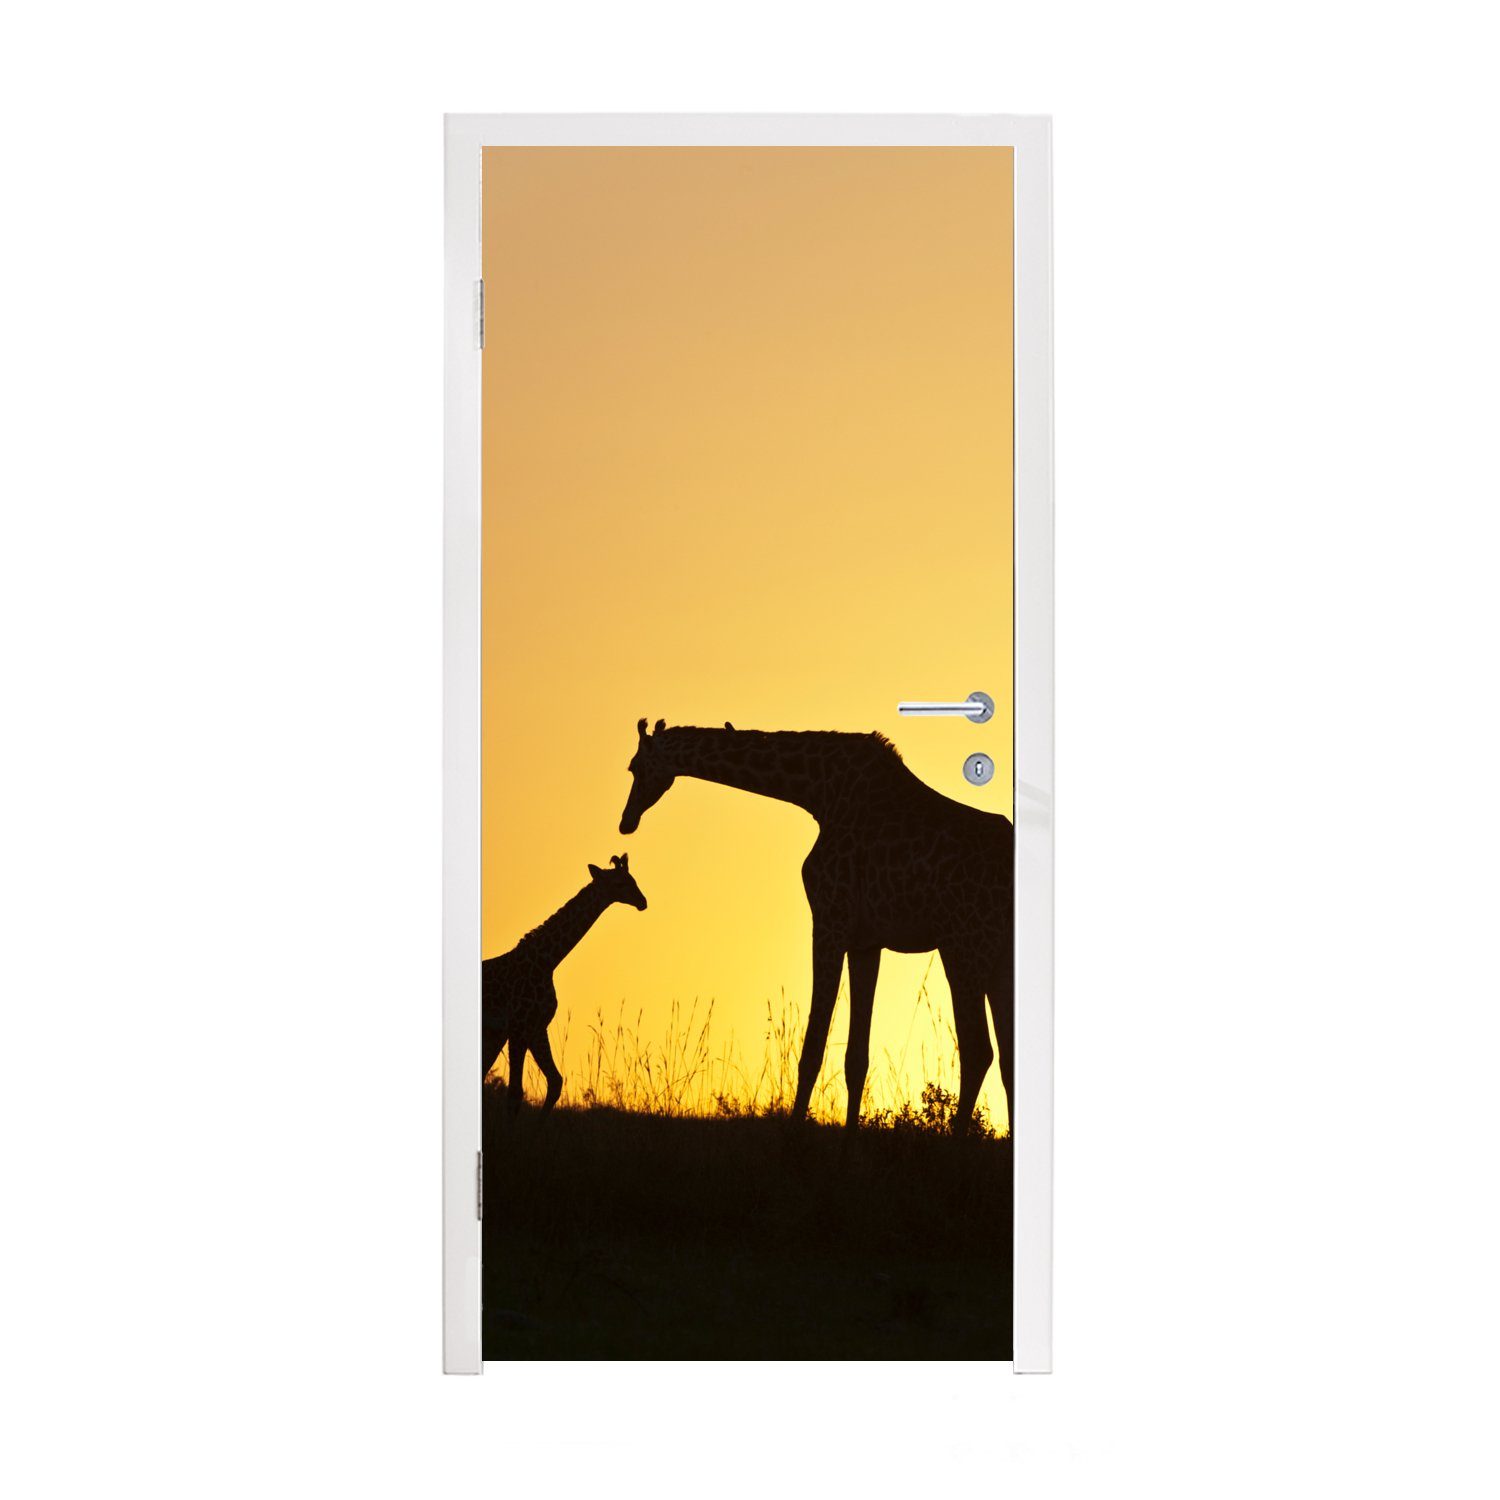 75x205 Türaufkleber, St), Scherenschnitt MuchoWow Tür, bedruckt, - Fototapete Matt, Kalb, Türtapete - (1 cm Giraffe für